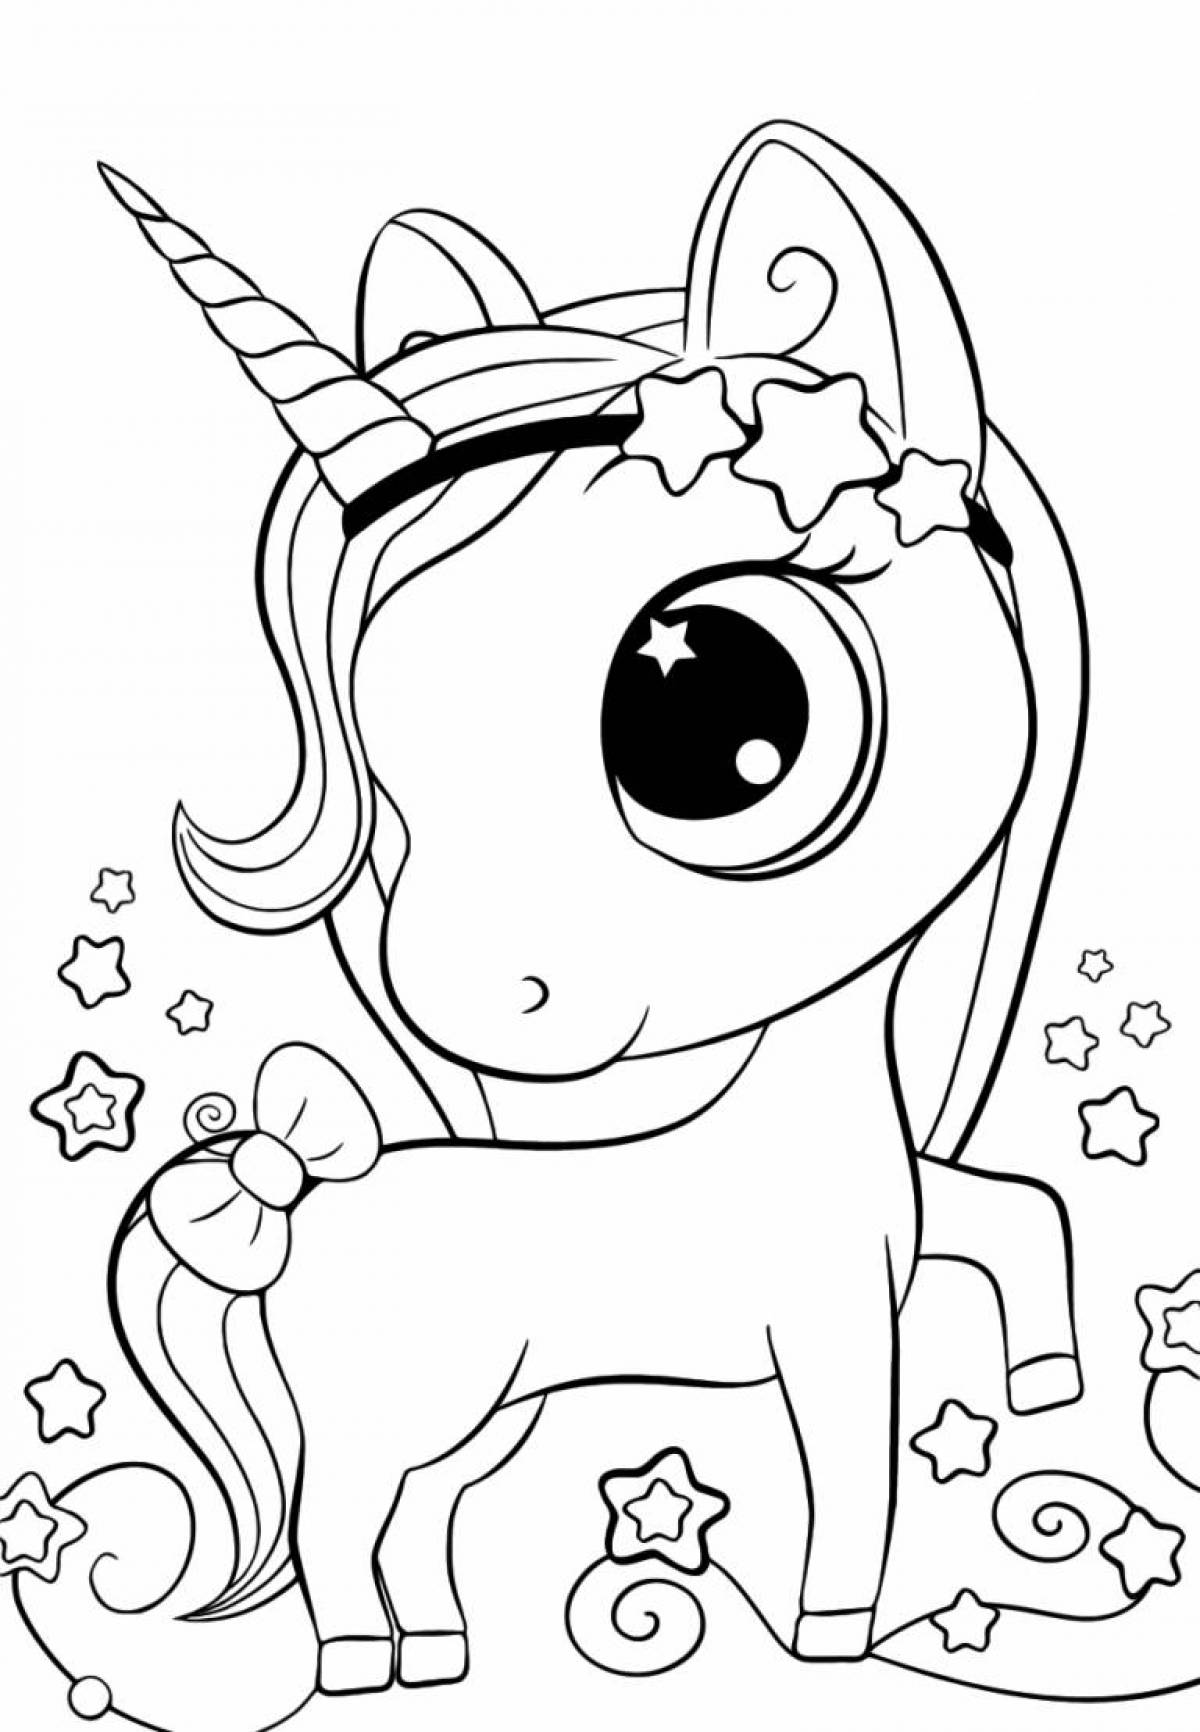 Happy coloring unicorns for girls